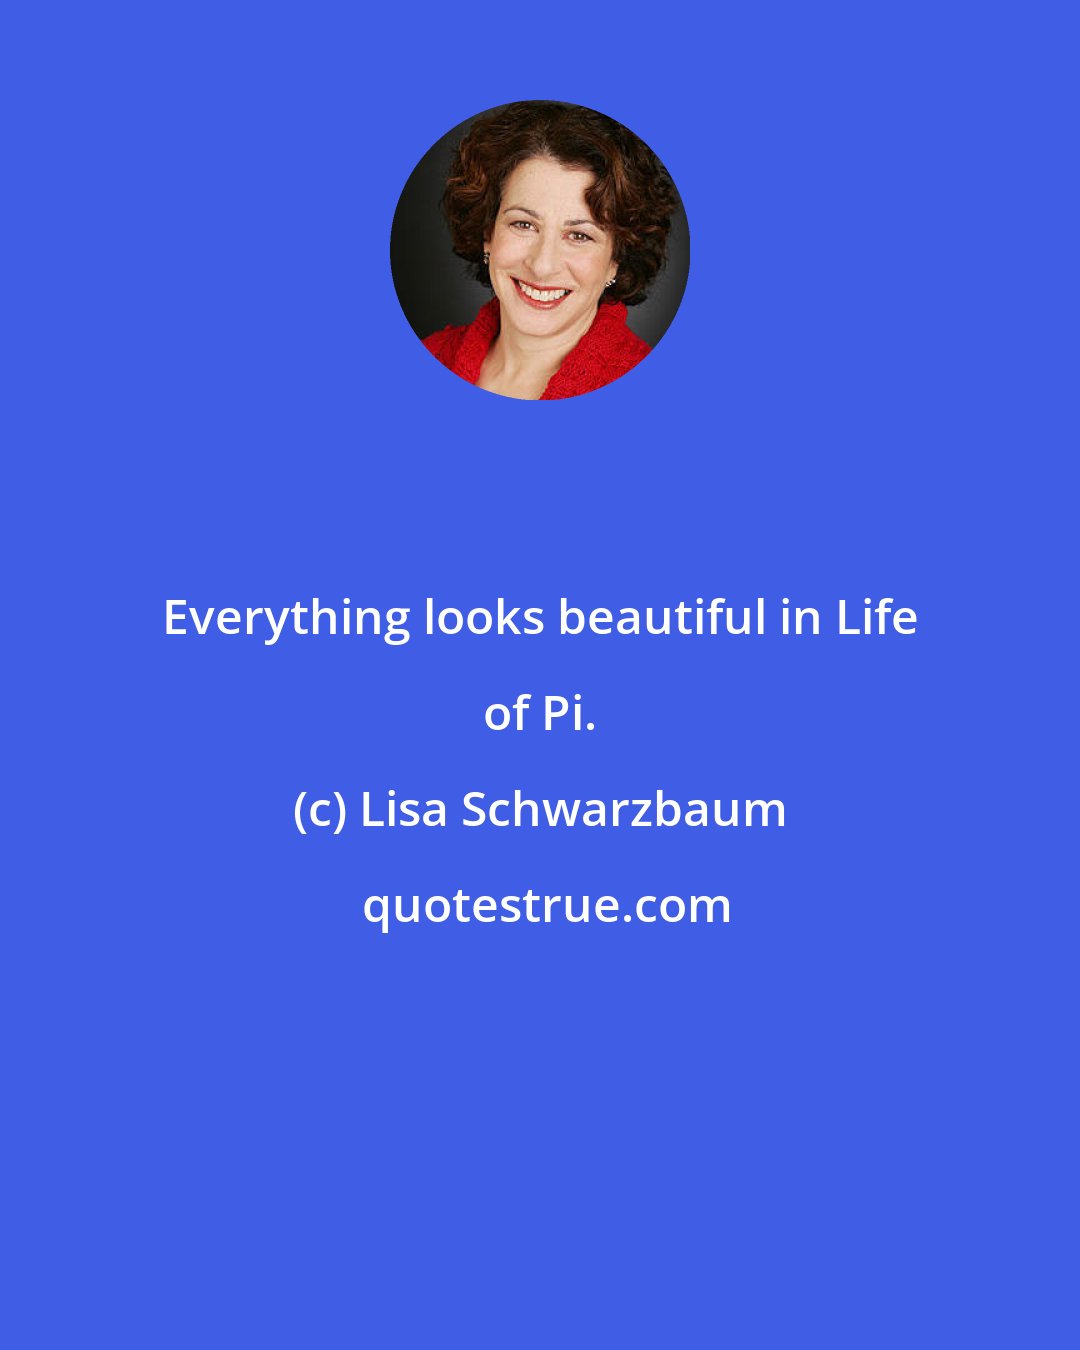 Lisa Schwarzbaum: Everything looks beautiful in Life of Pi.